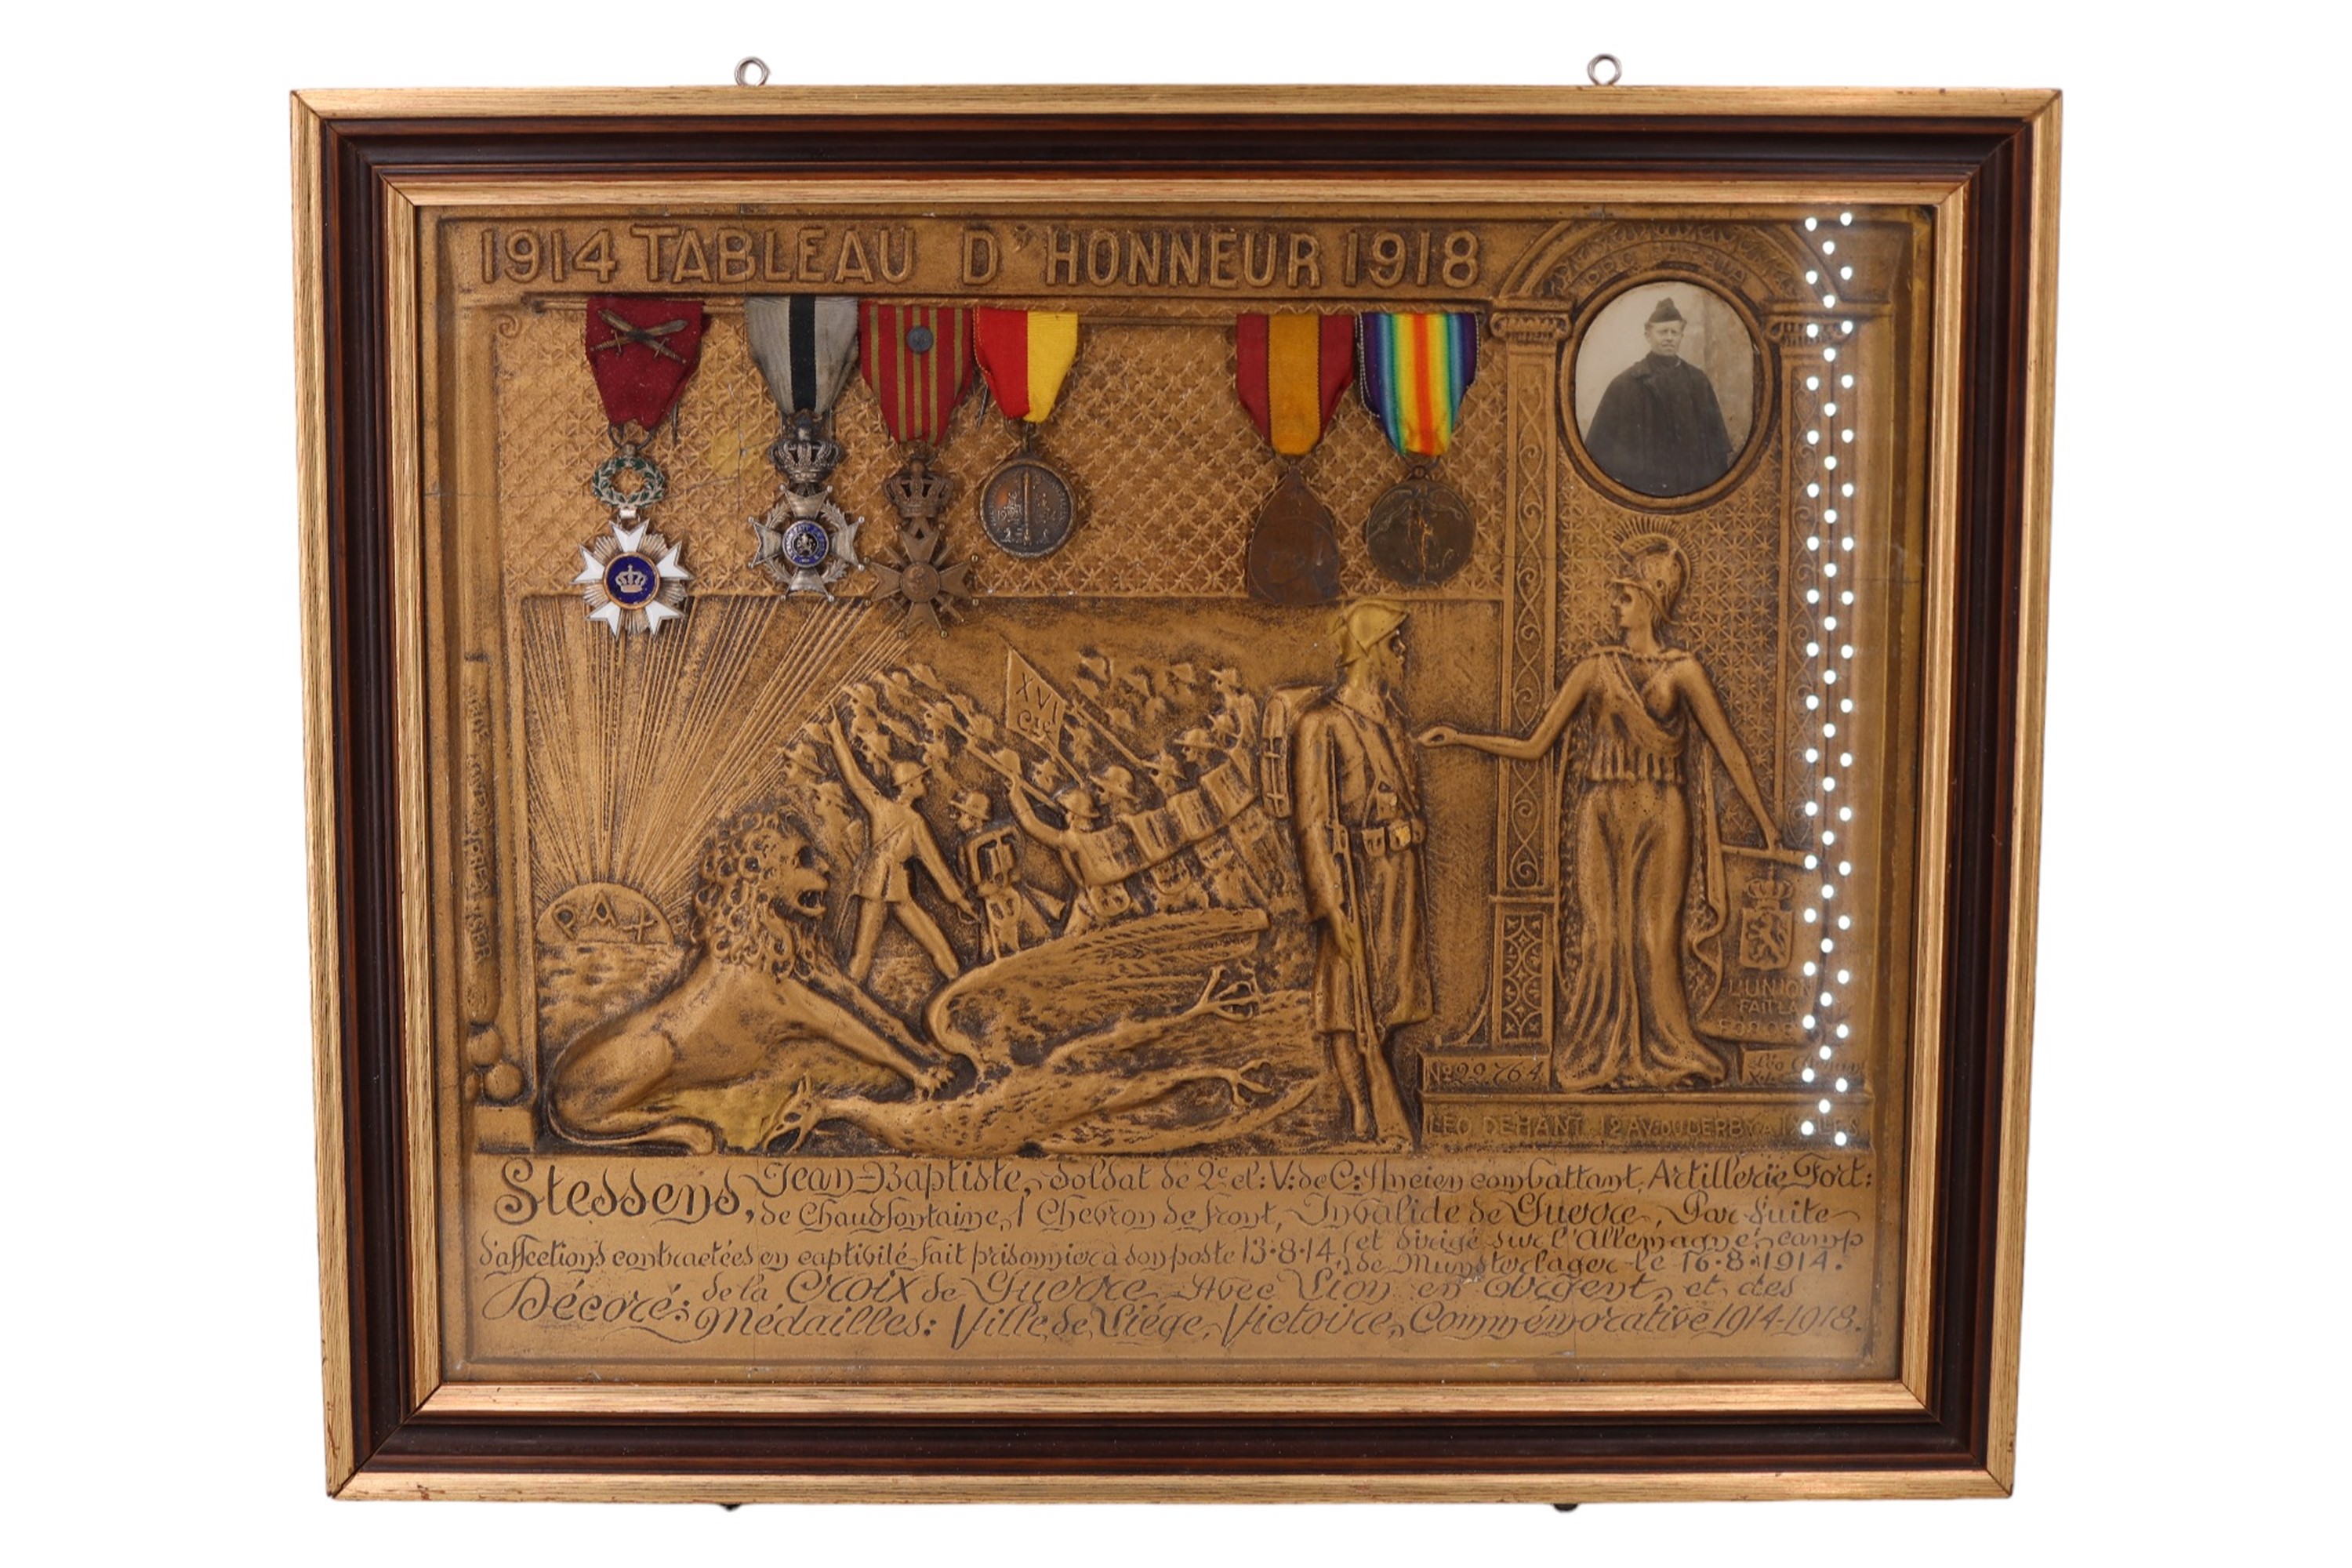 A Great War Belgian Tableau D'Honneur pertaining to Invalide de Guerre and prisoner of War Jean- - Image 2 of 7